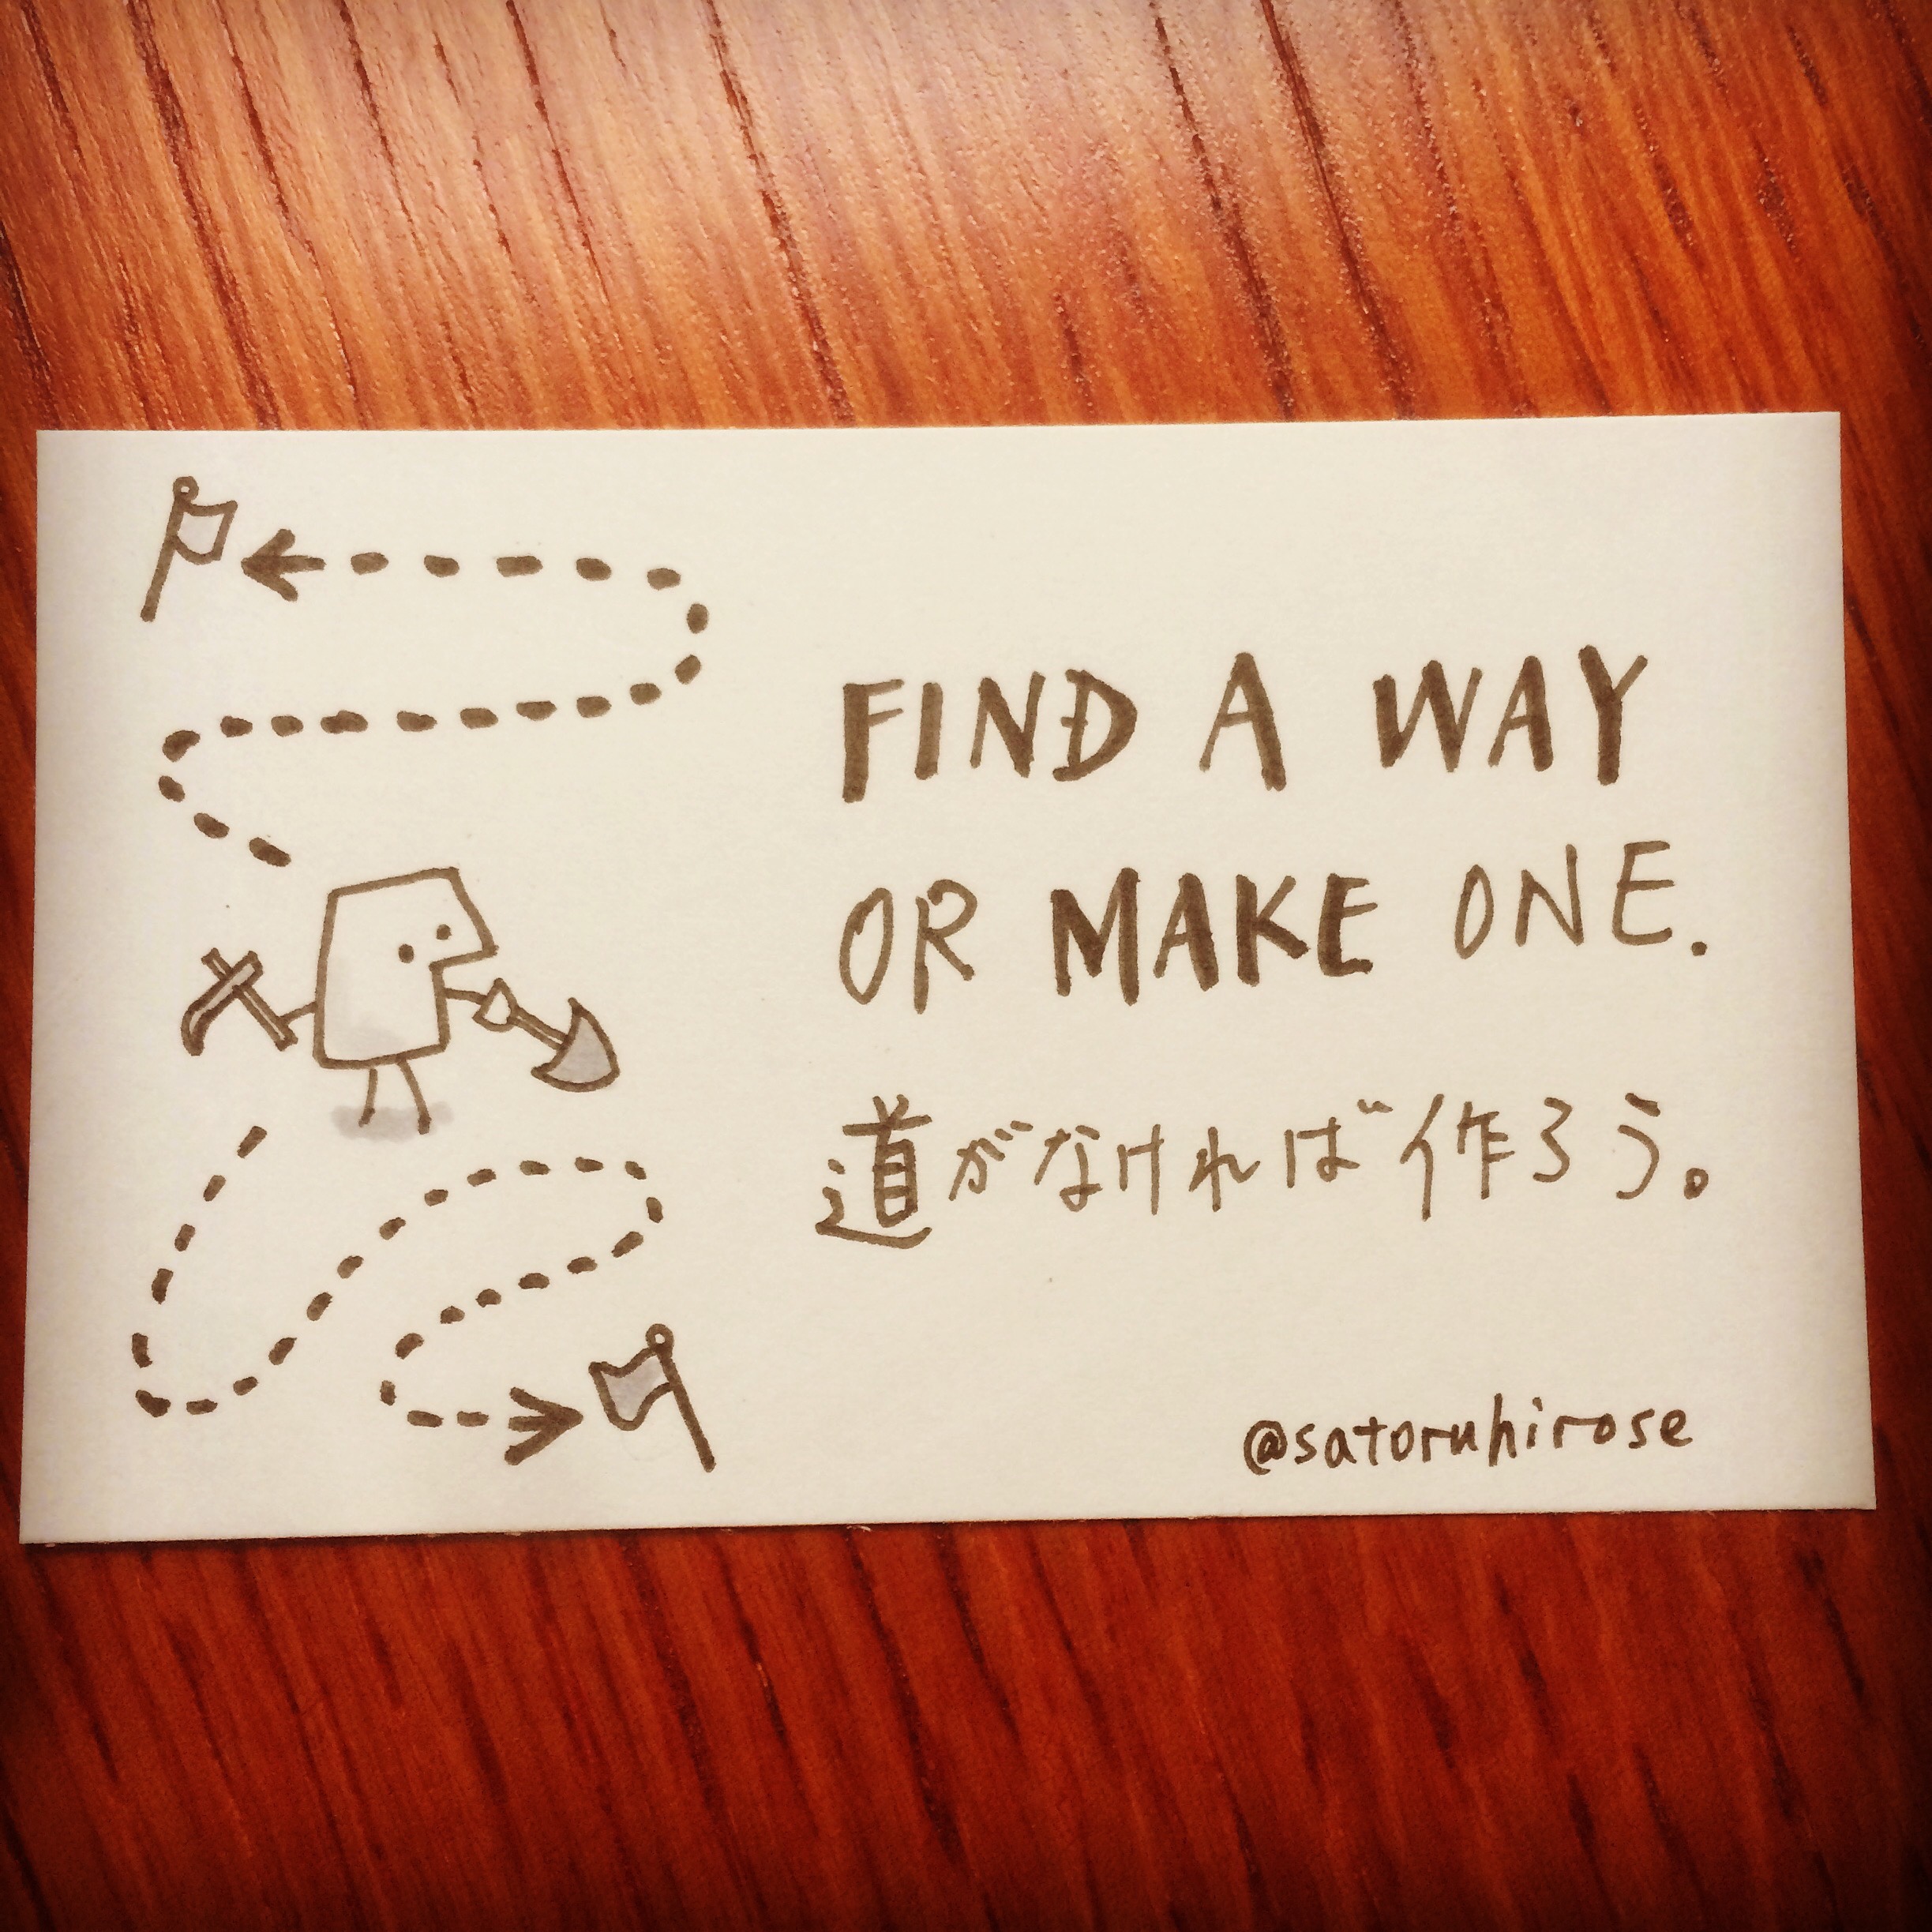 Find a way or make one.